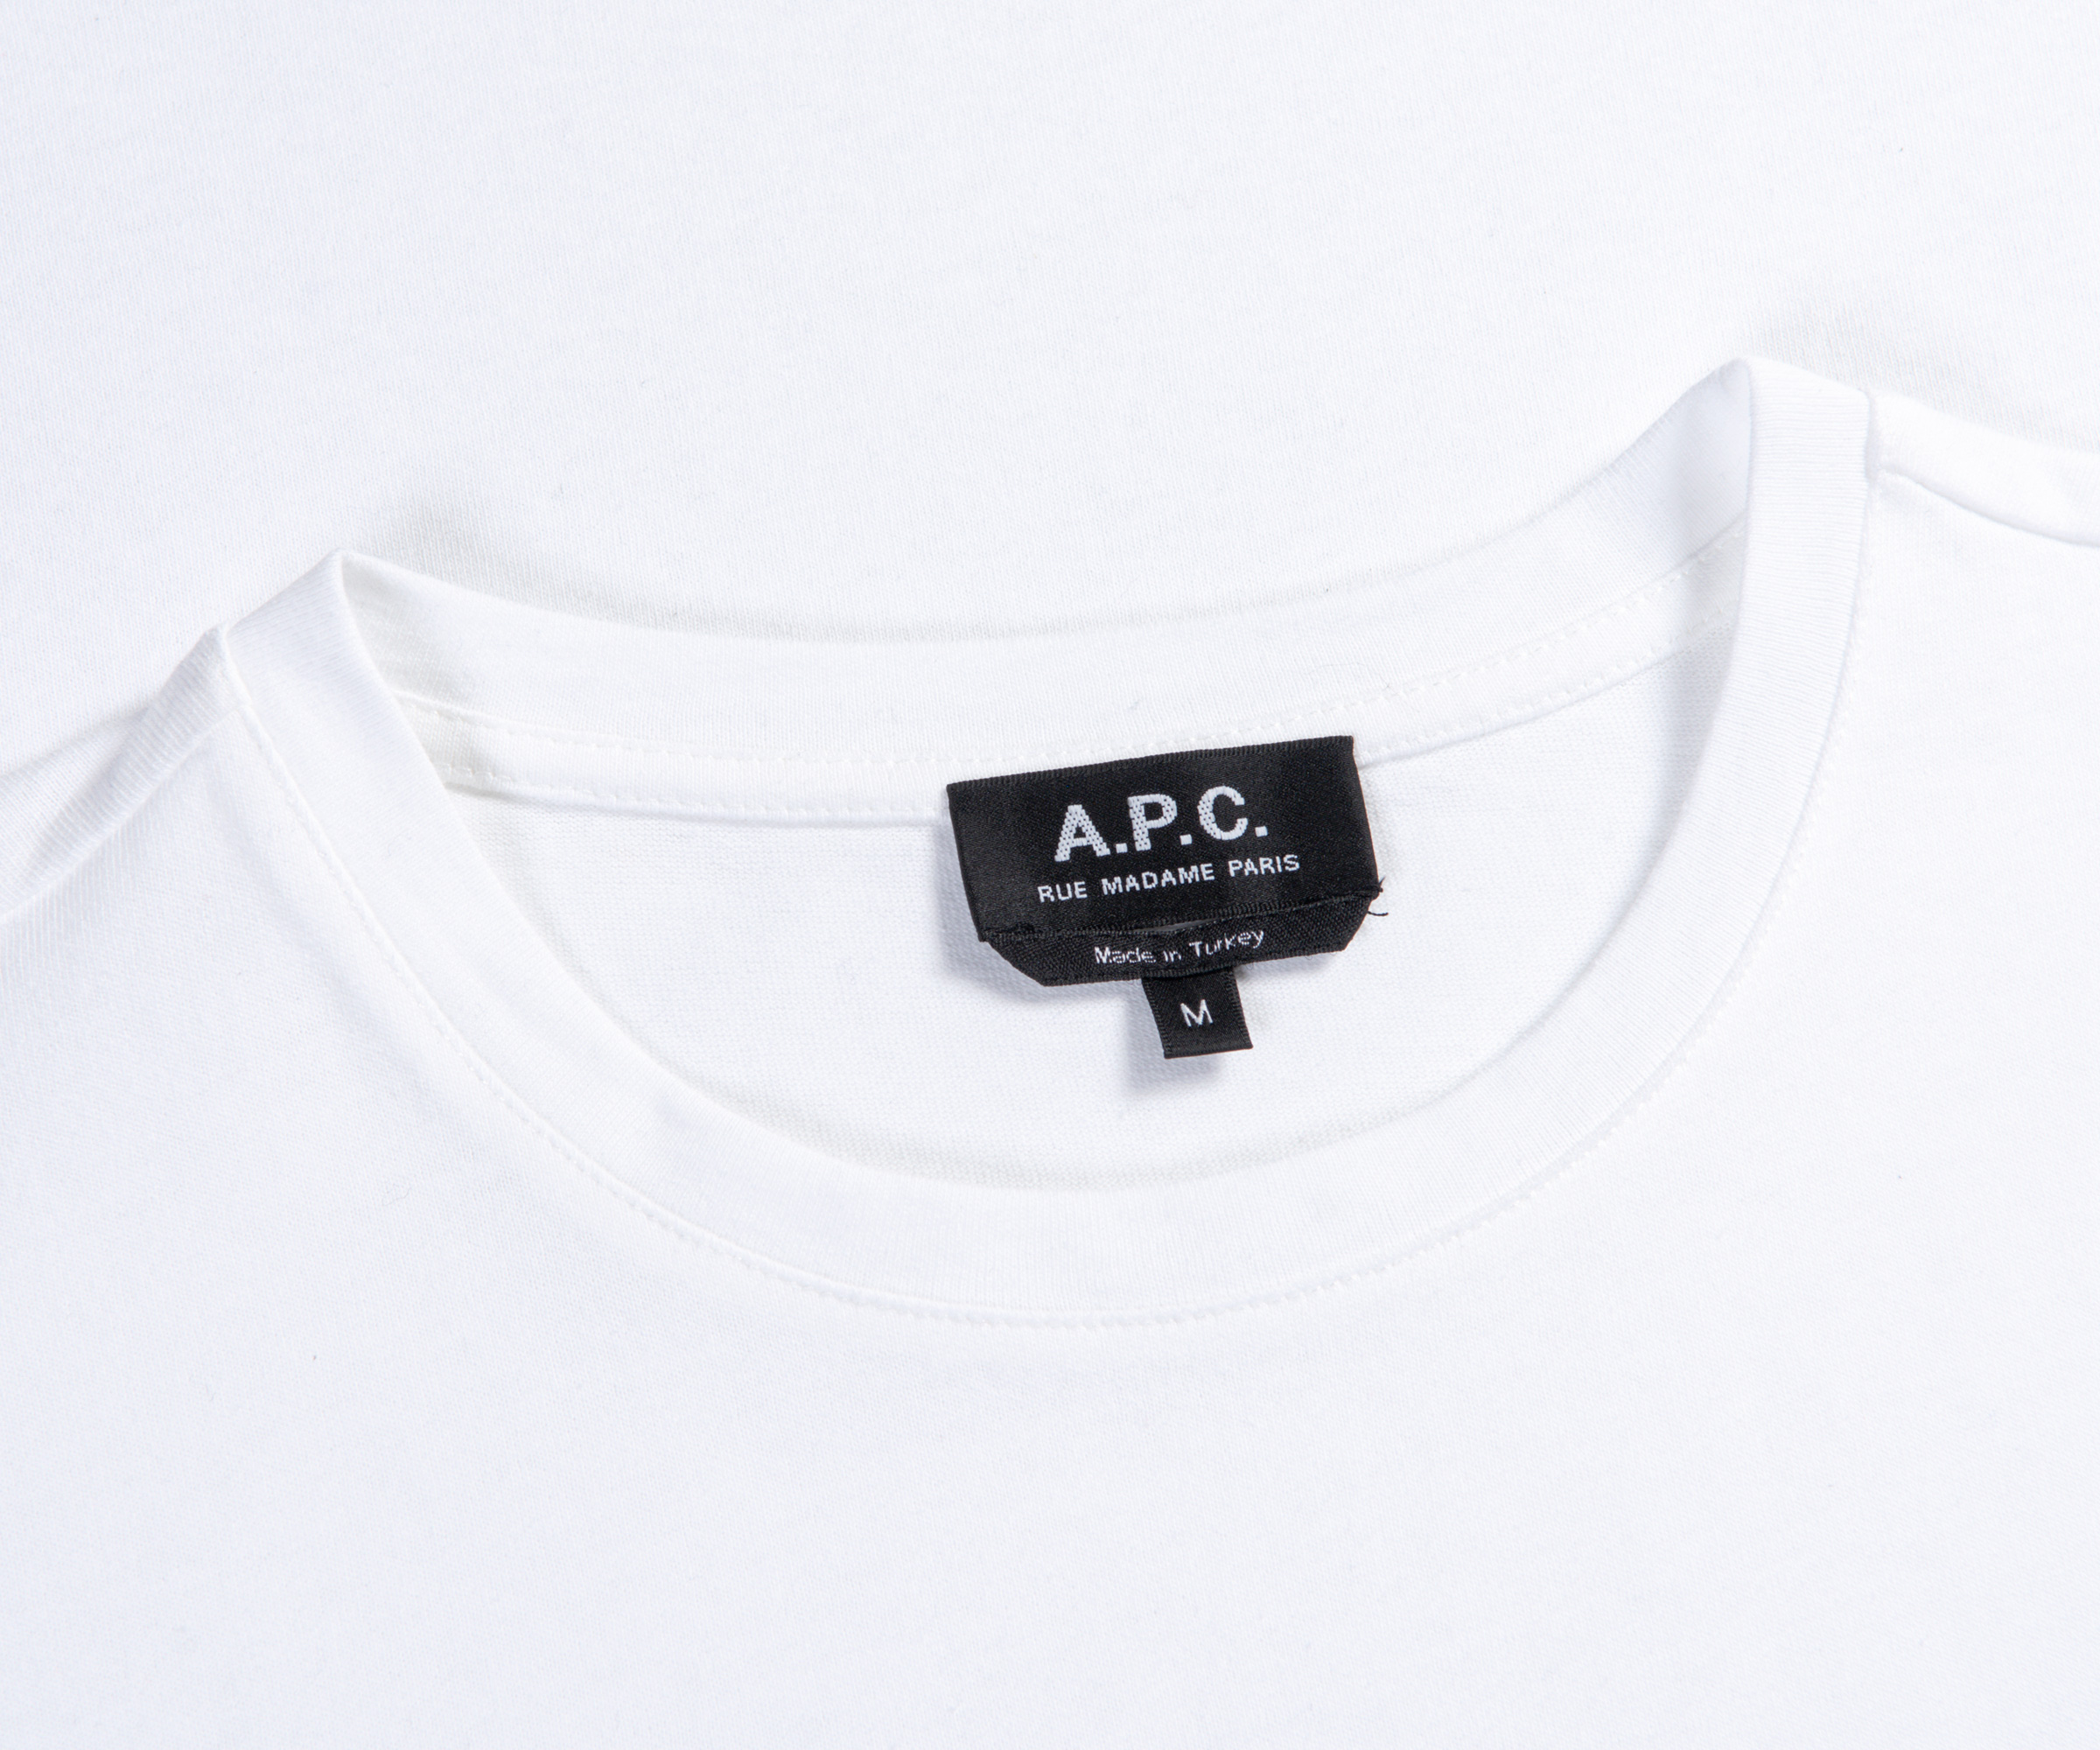 APC 'Decale' Logo T-Shirt White